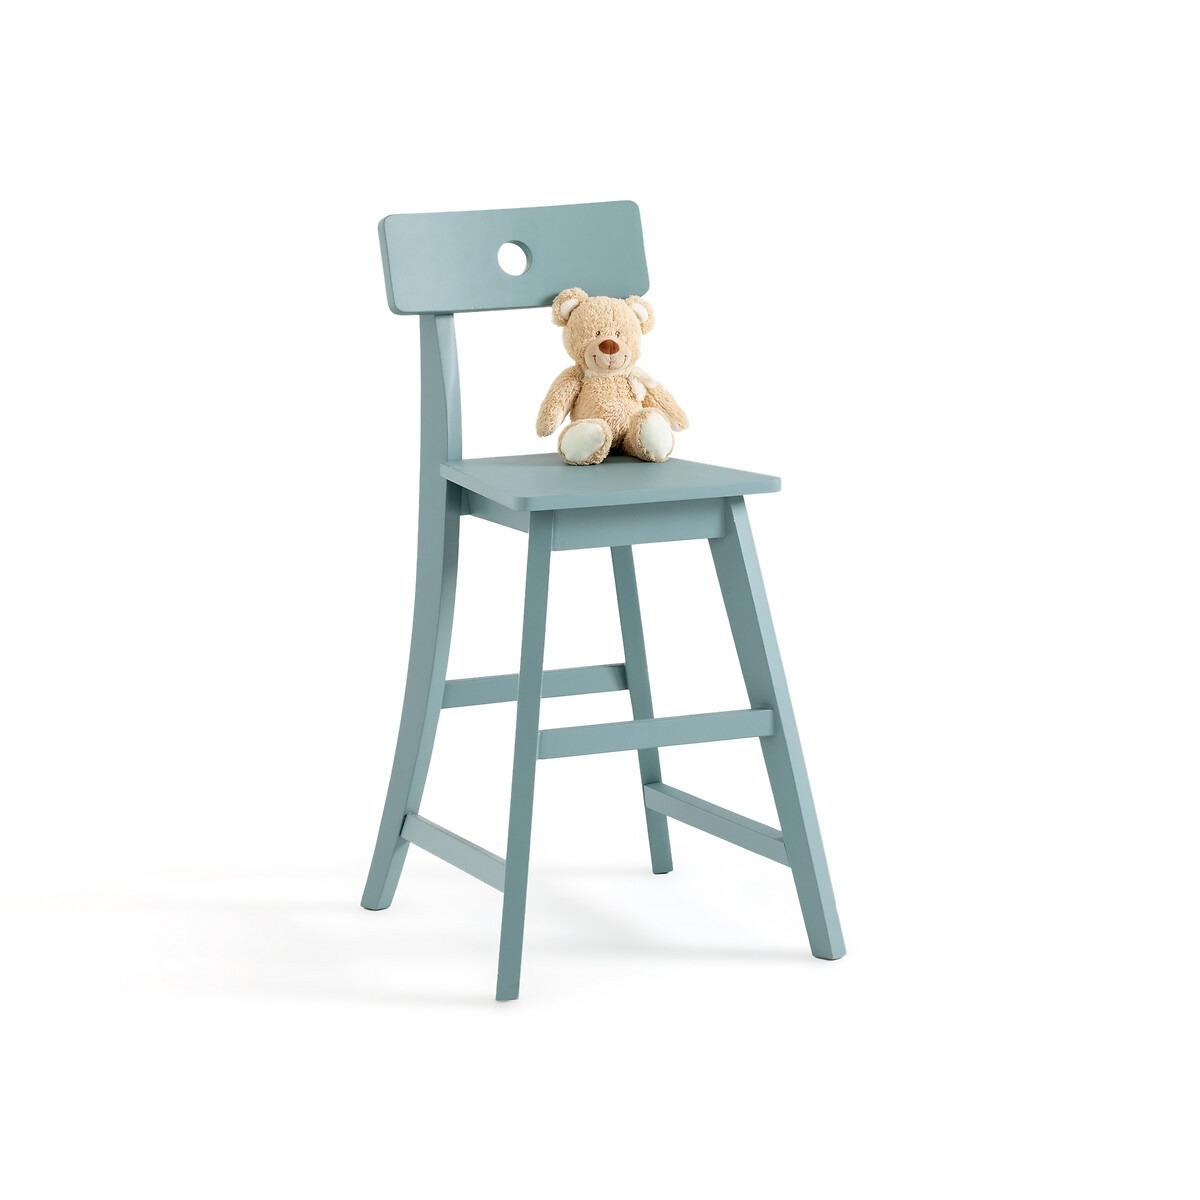 Keren Rubberwood Child's Chair - image 1